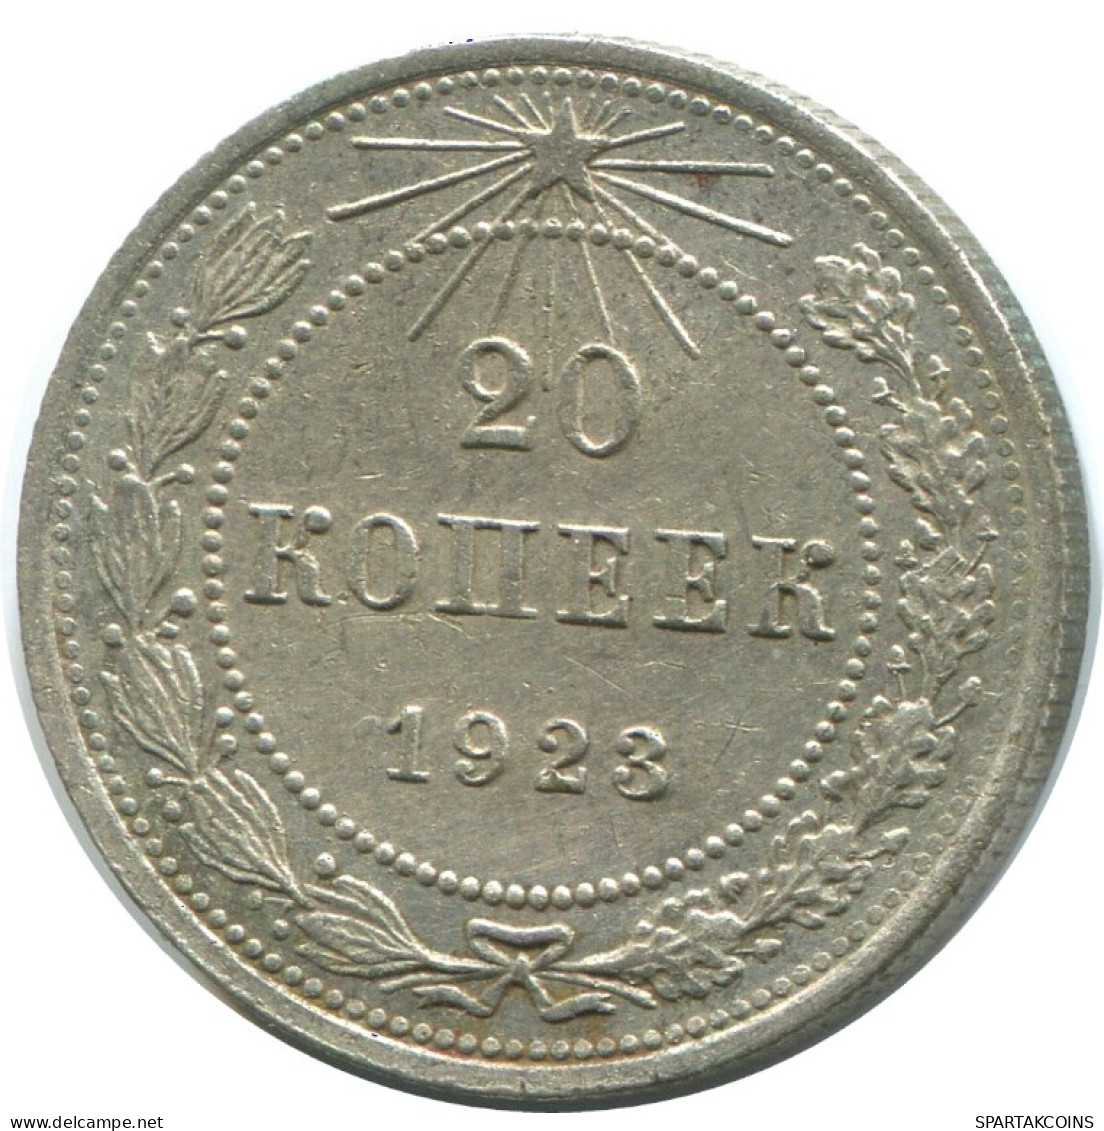 20 KOPEKS 1923 RUSSIA RSFSR SILVER Coin HIGH GRADE #AF474.4.U.A - Rusia